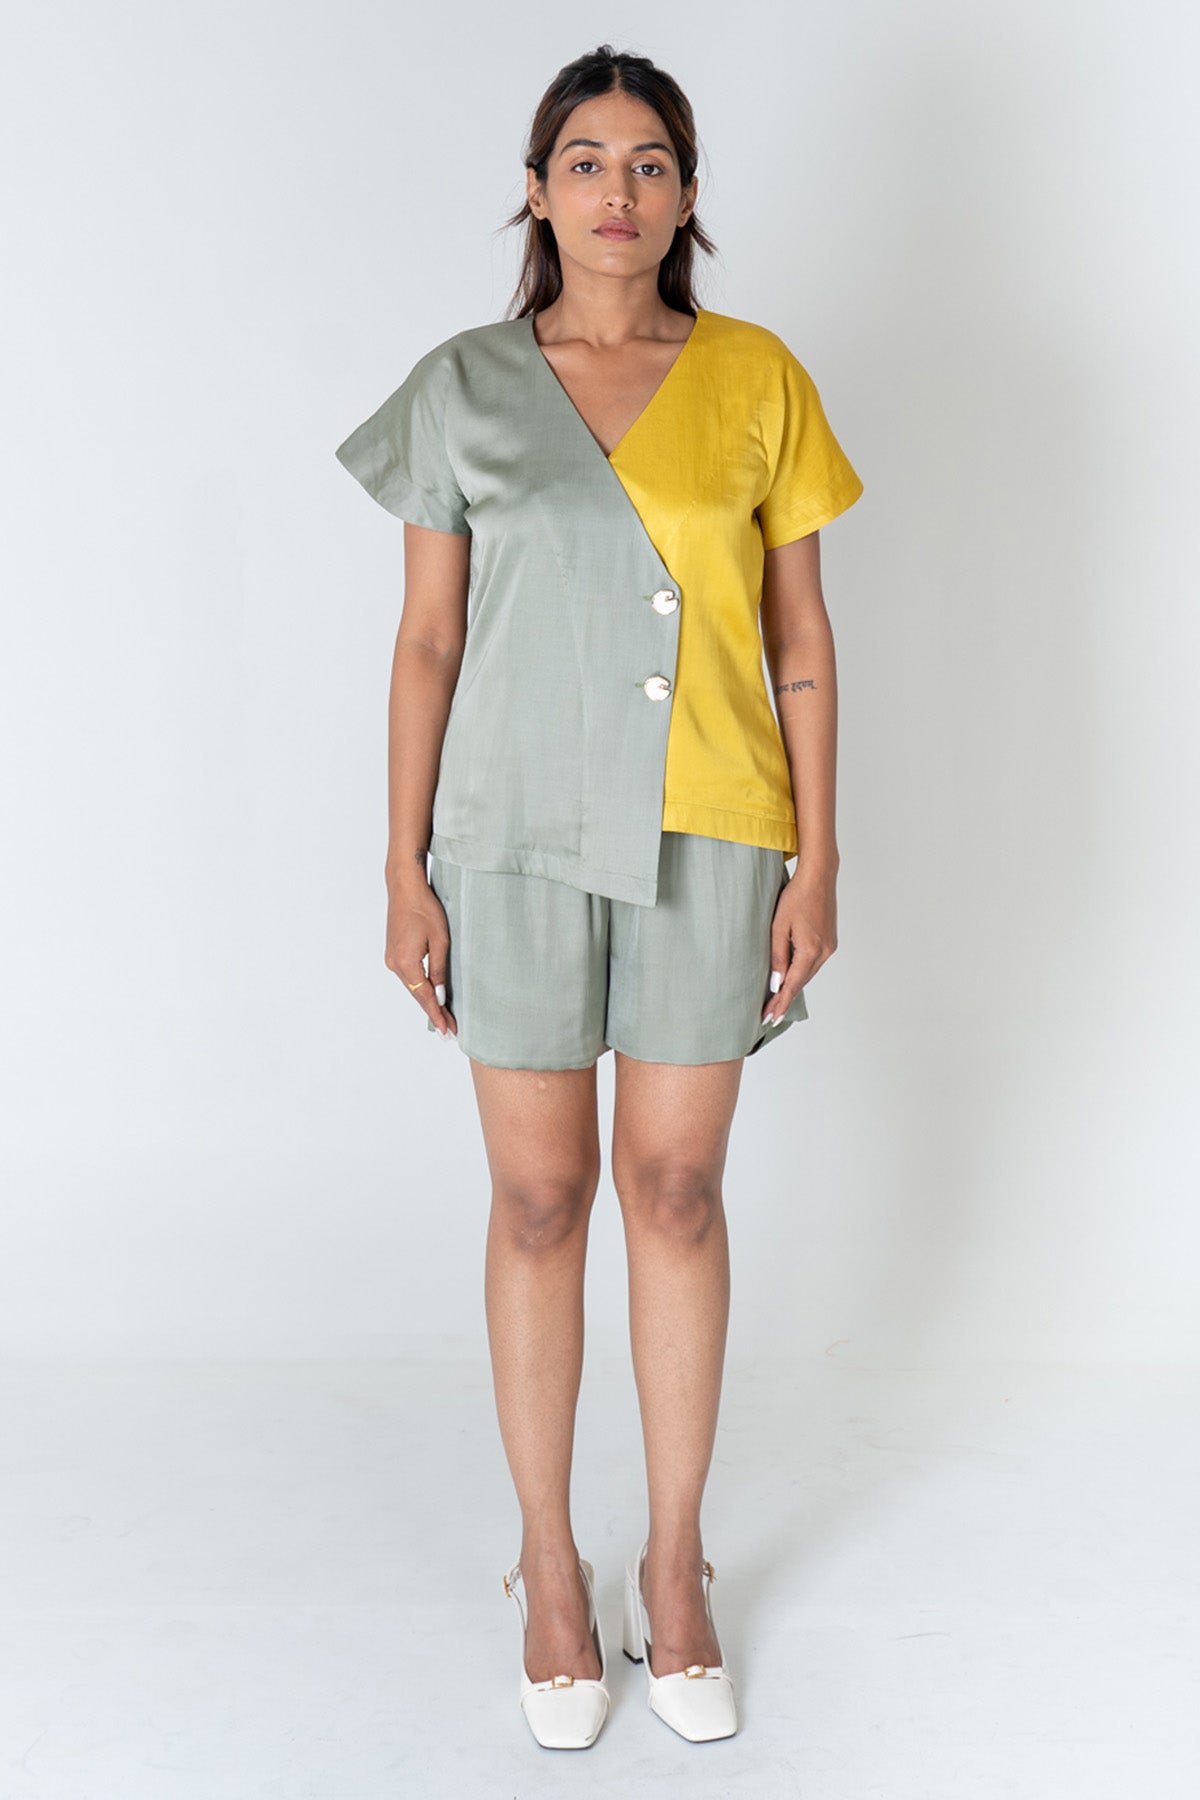 Neora by Nehal Chopra Green & Yellow Shirt & Shorts for women online at ScrollnShops